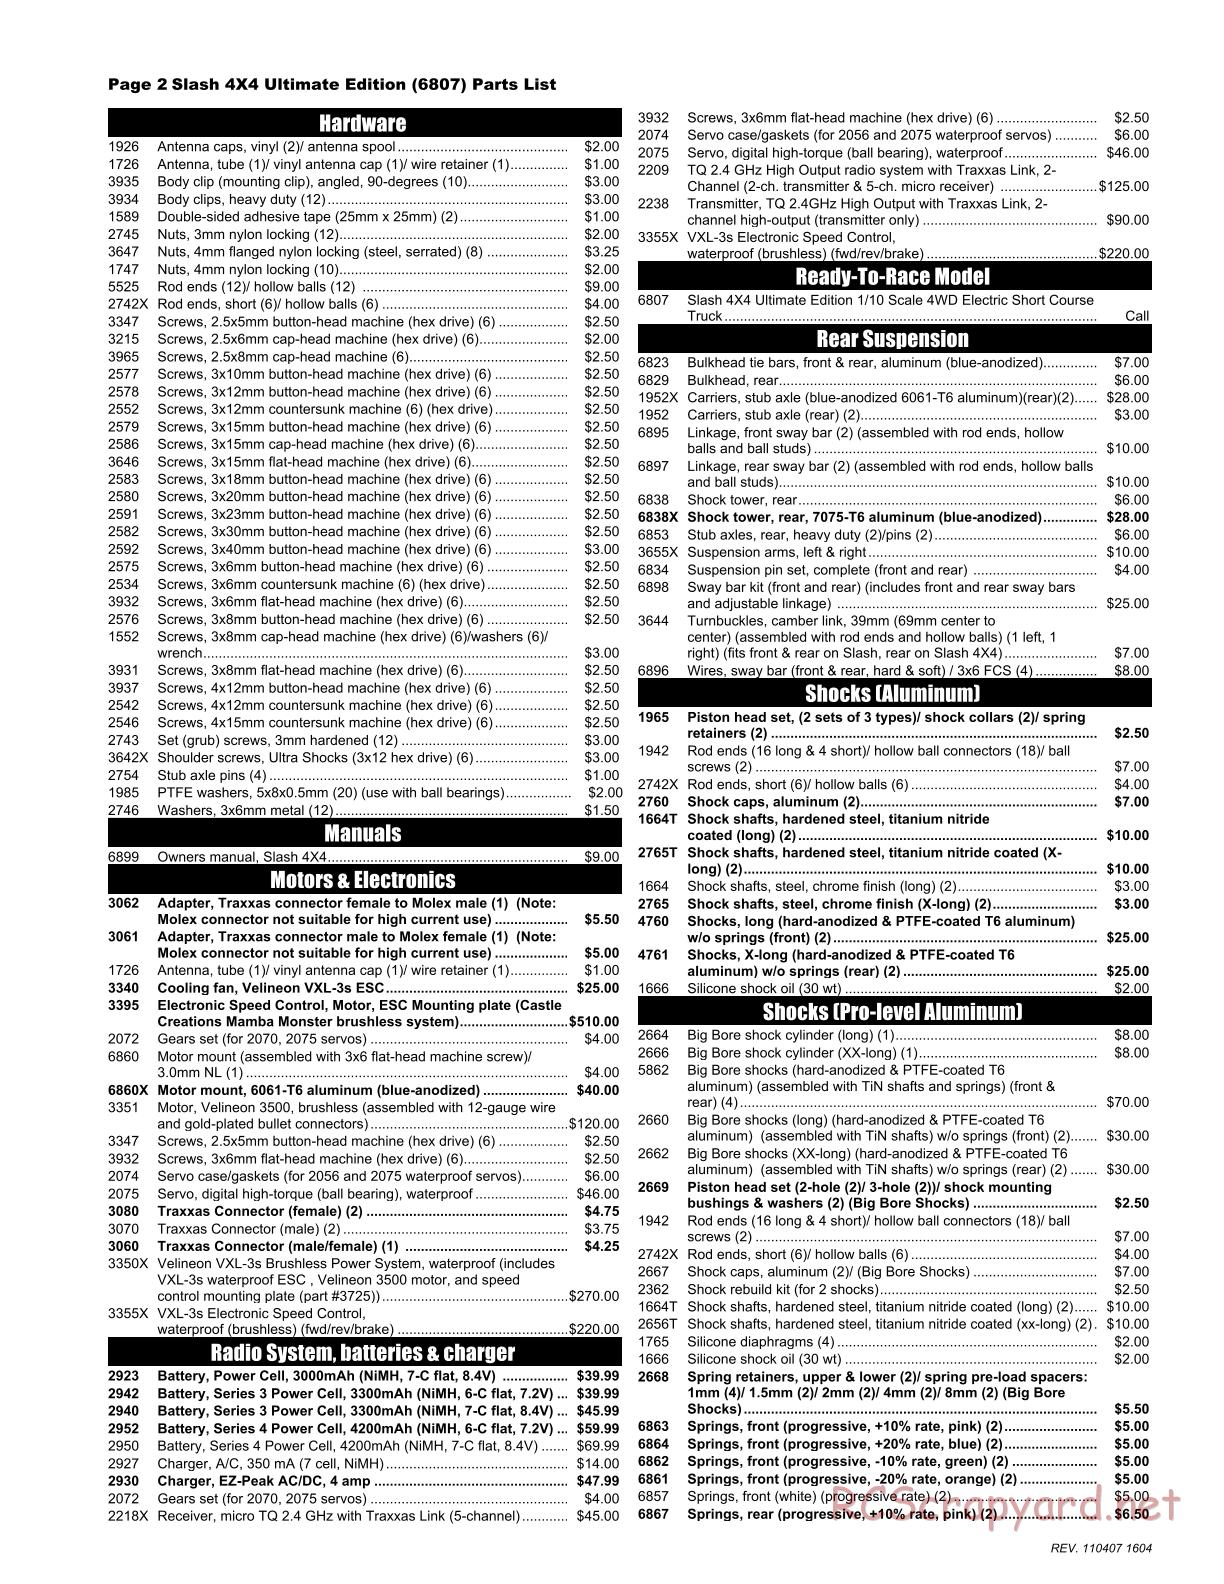 Traxxas - Slash 4x4 Ultimate - Parts List - Page 2